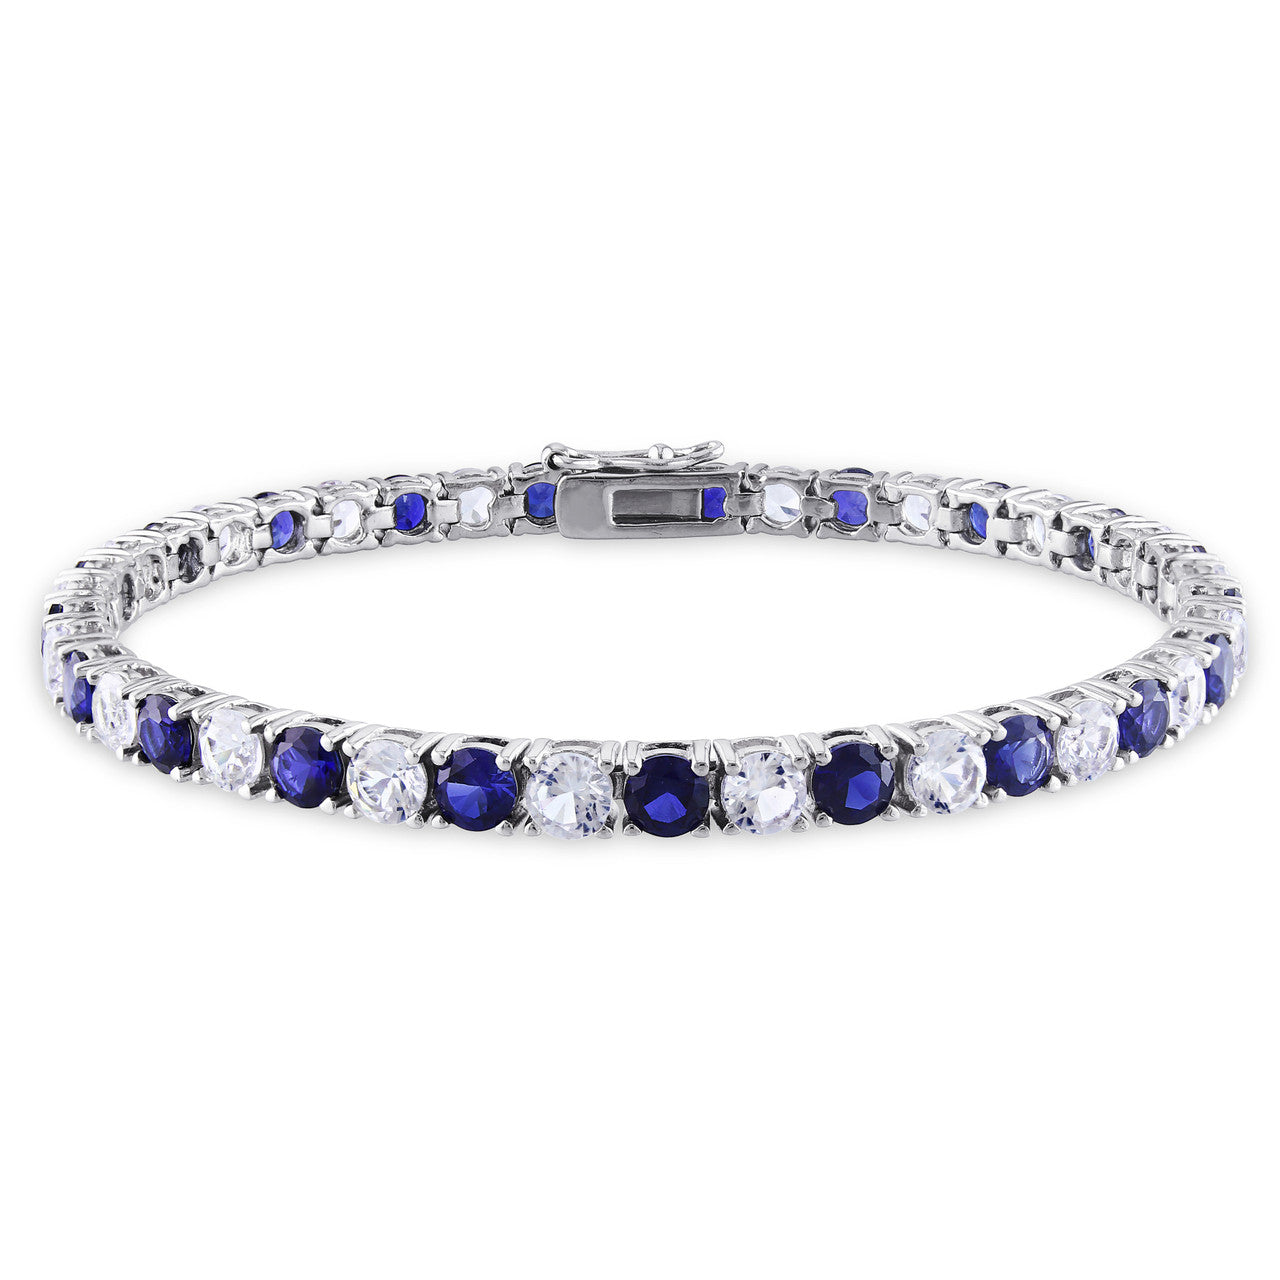 Ice Jewellery 14 1/4 CT TGW Created Blue & White Sapphire Bracelet Silver Length (inches): 7.25" - 75000002043 | Ice Jewellery Australia